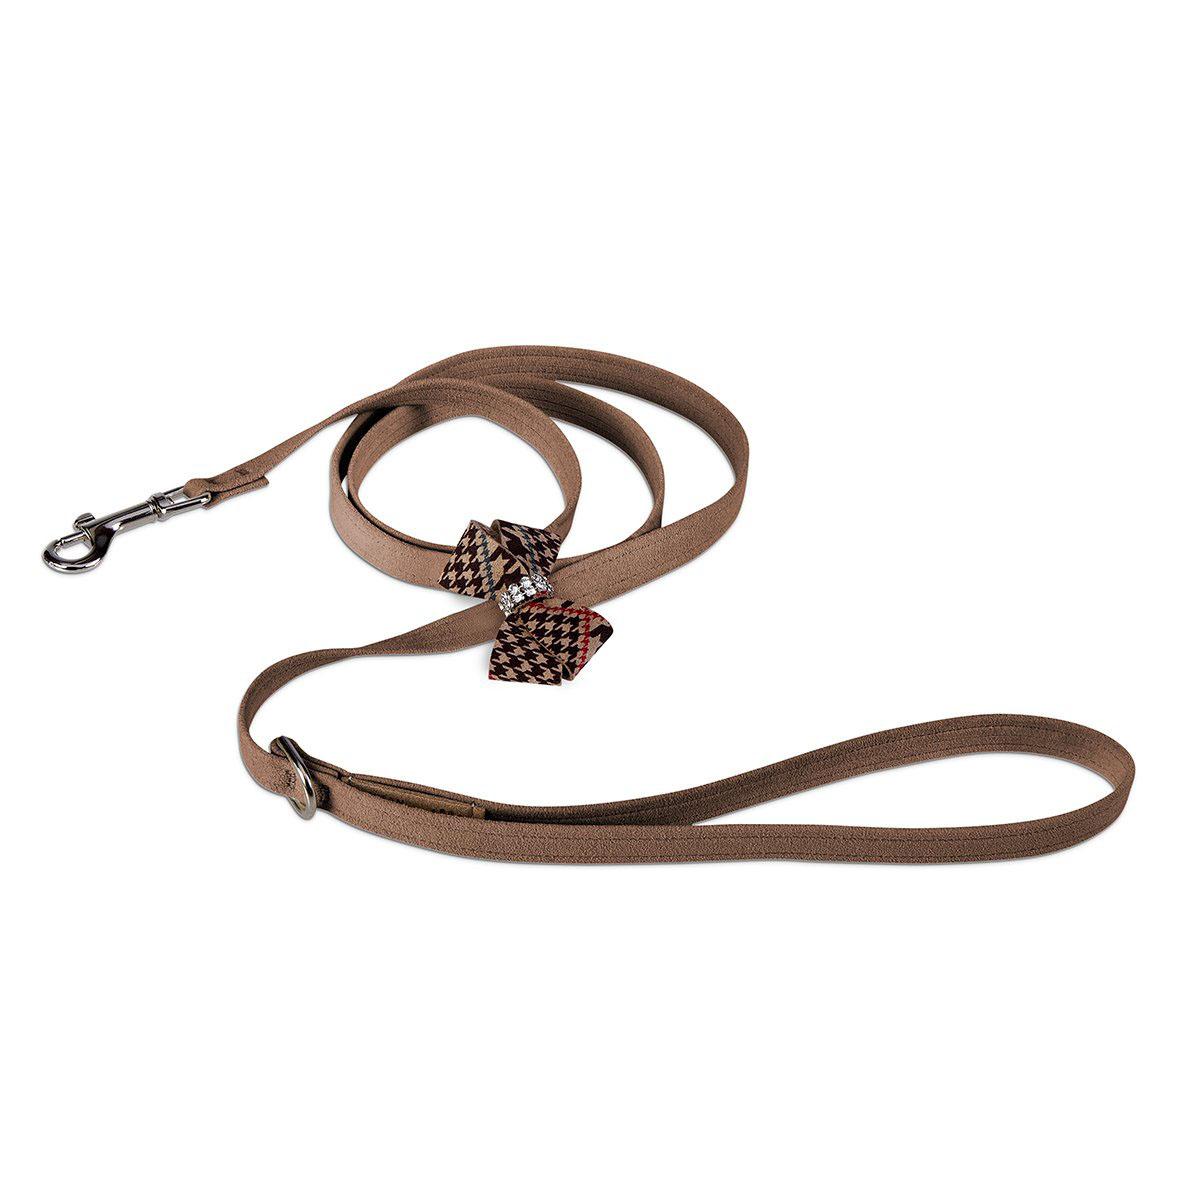 Chocolate Glen Houndstooth Nouveau Bow Dog Leash by Susan Lanci - Fawn